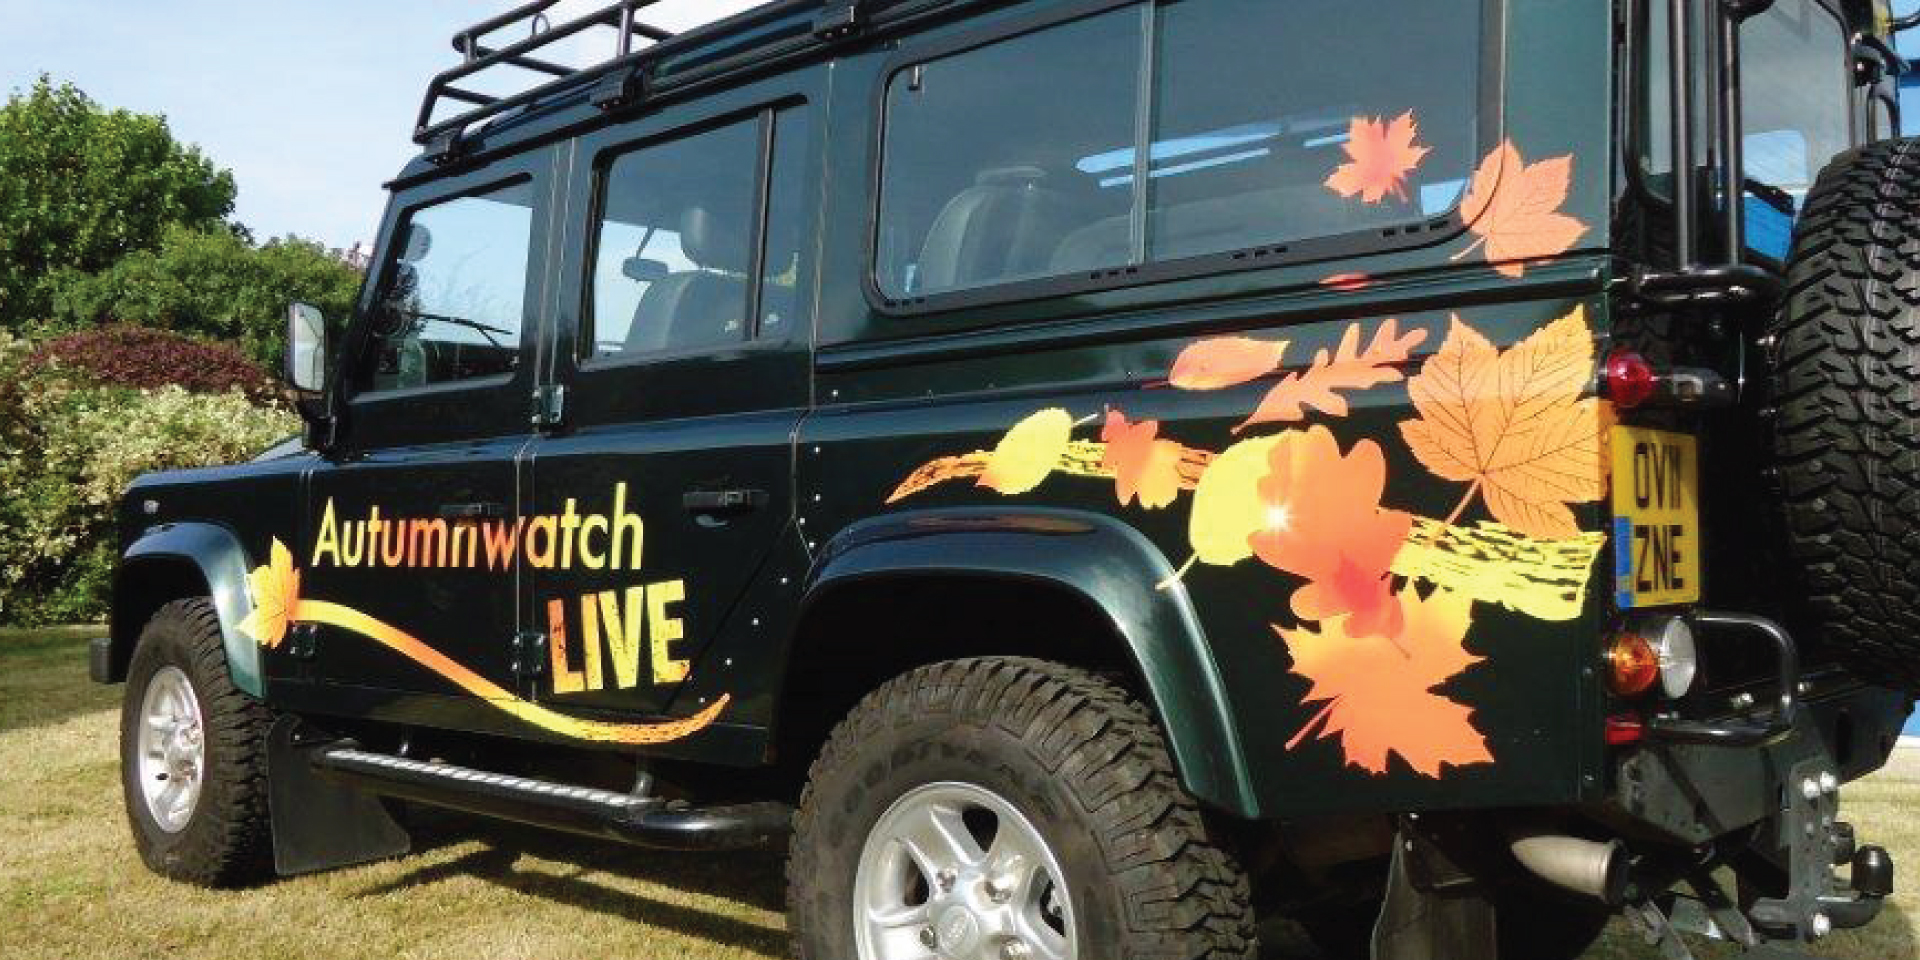 BBC Autumnwatch Live vehicle graphics design